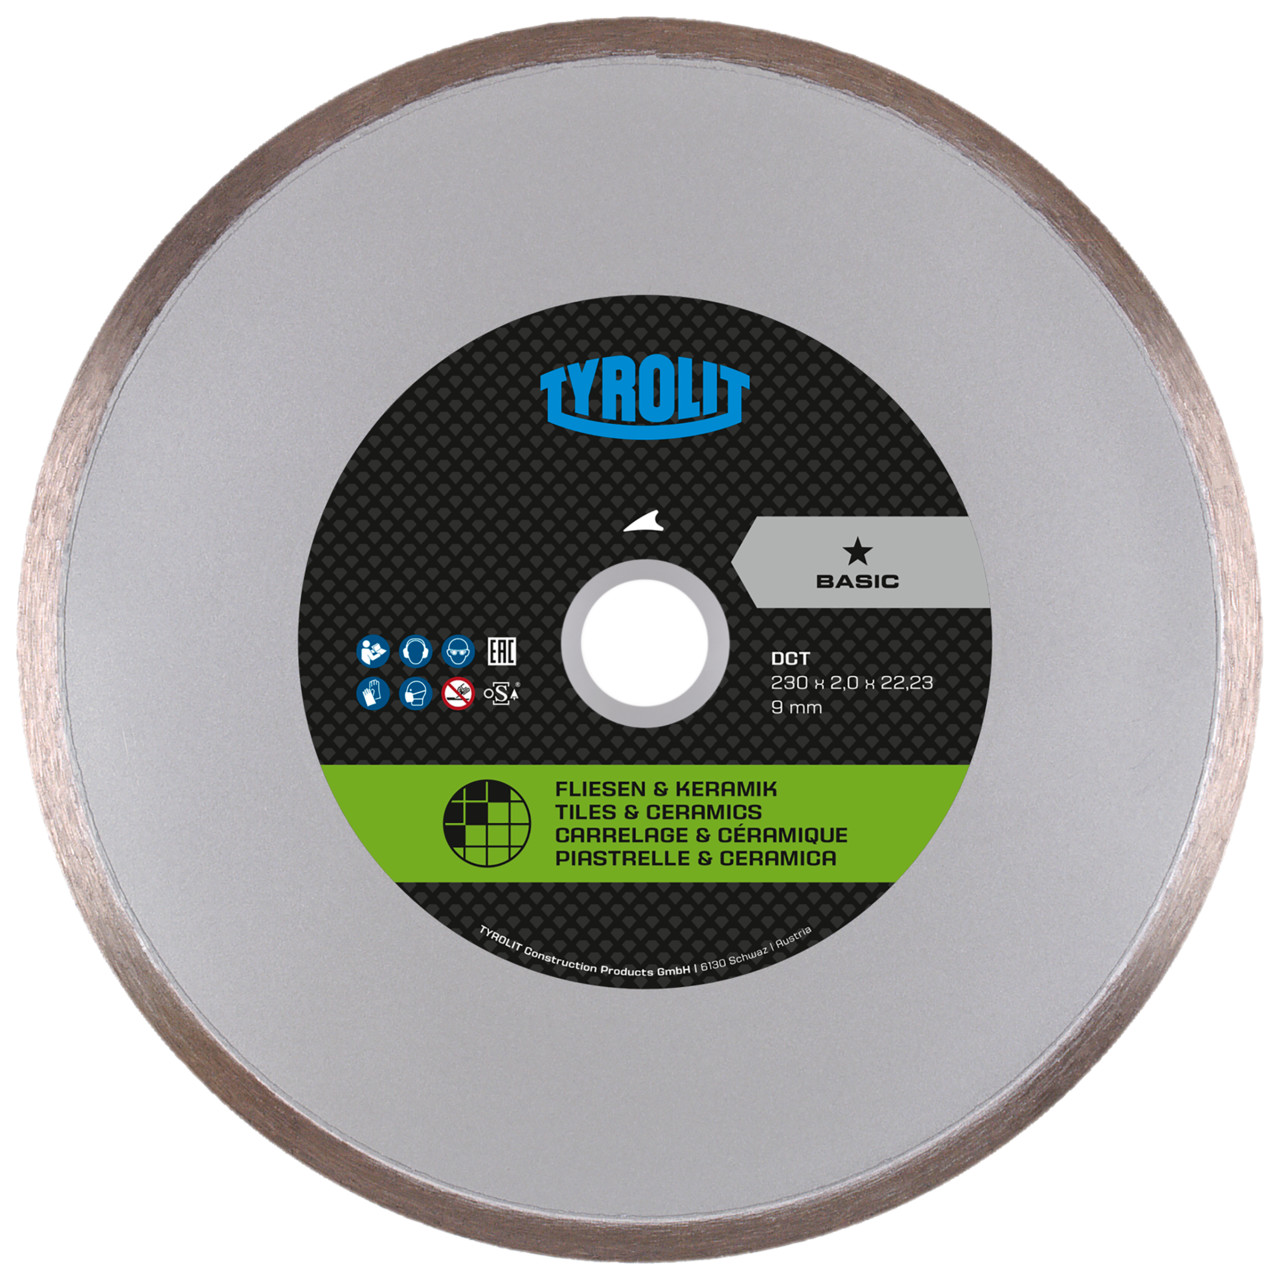 Tyrolit Hojas de sierra de corte en seco DxDxH 230x2x22,23 DCT, forma: 1A1R (disco de corte con disco de corte continuo), Art. 475986